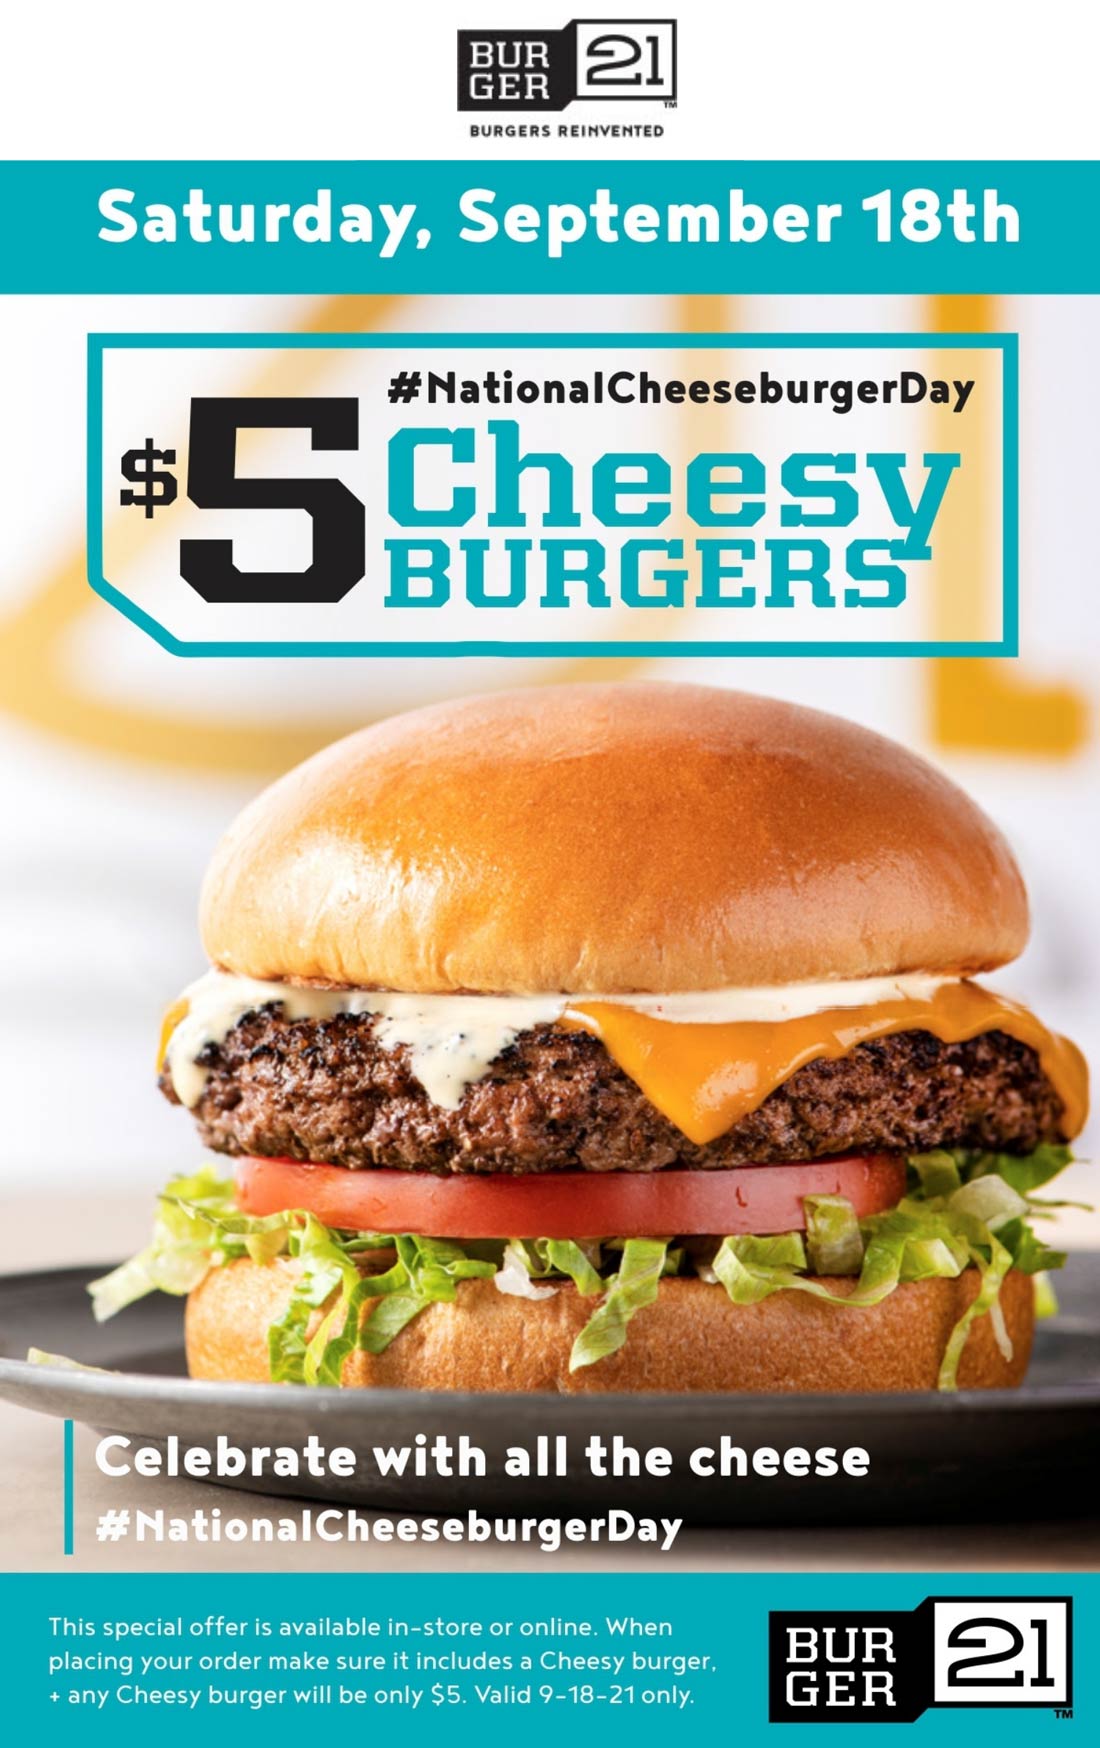 Burger 21 restaurants Coupon  $5 cheeseburger today at Burger 21 #burger21 